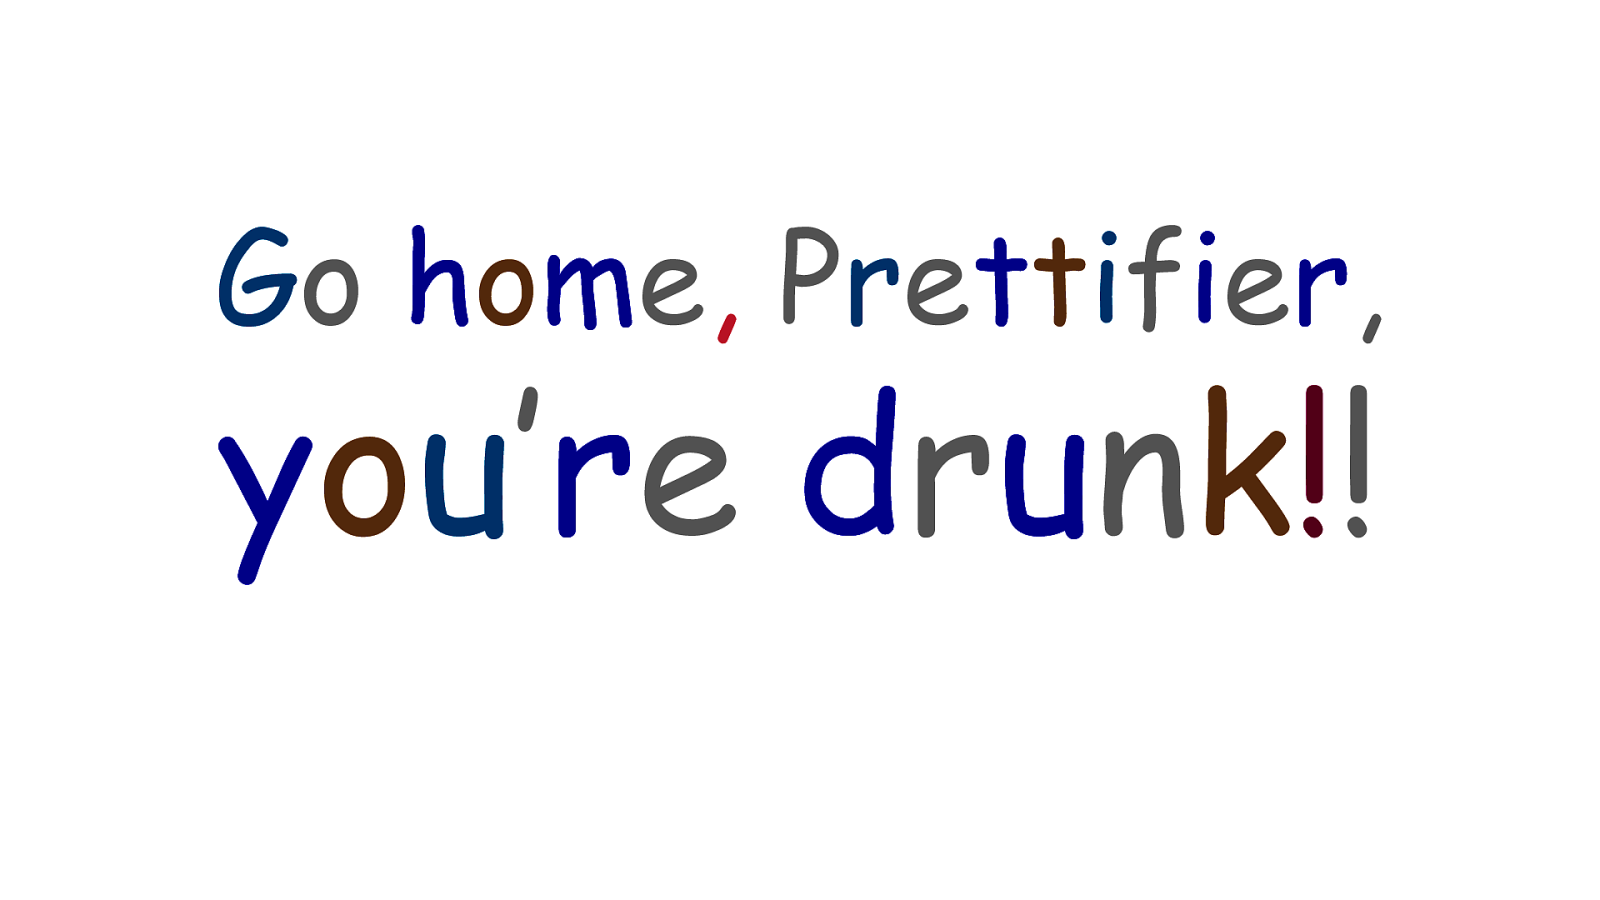 Go home, Prettifier, you’re drunk!!